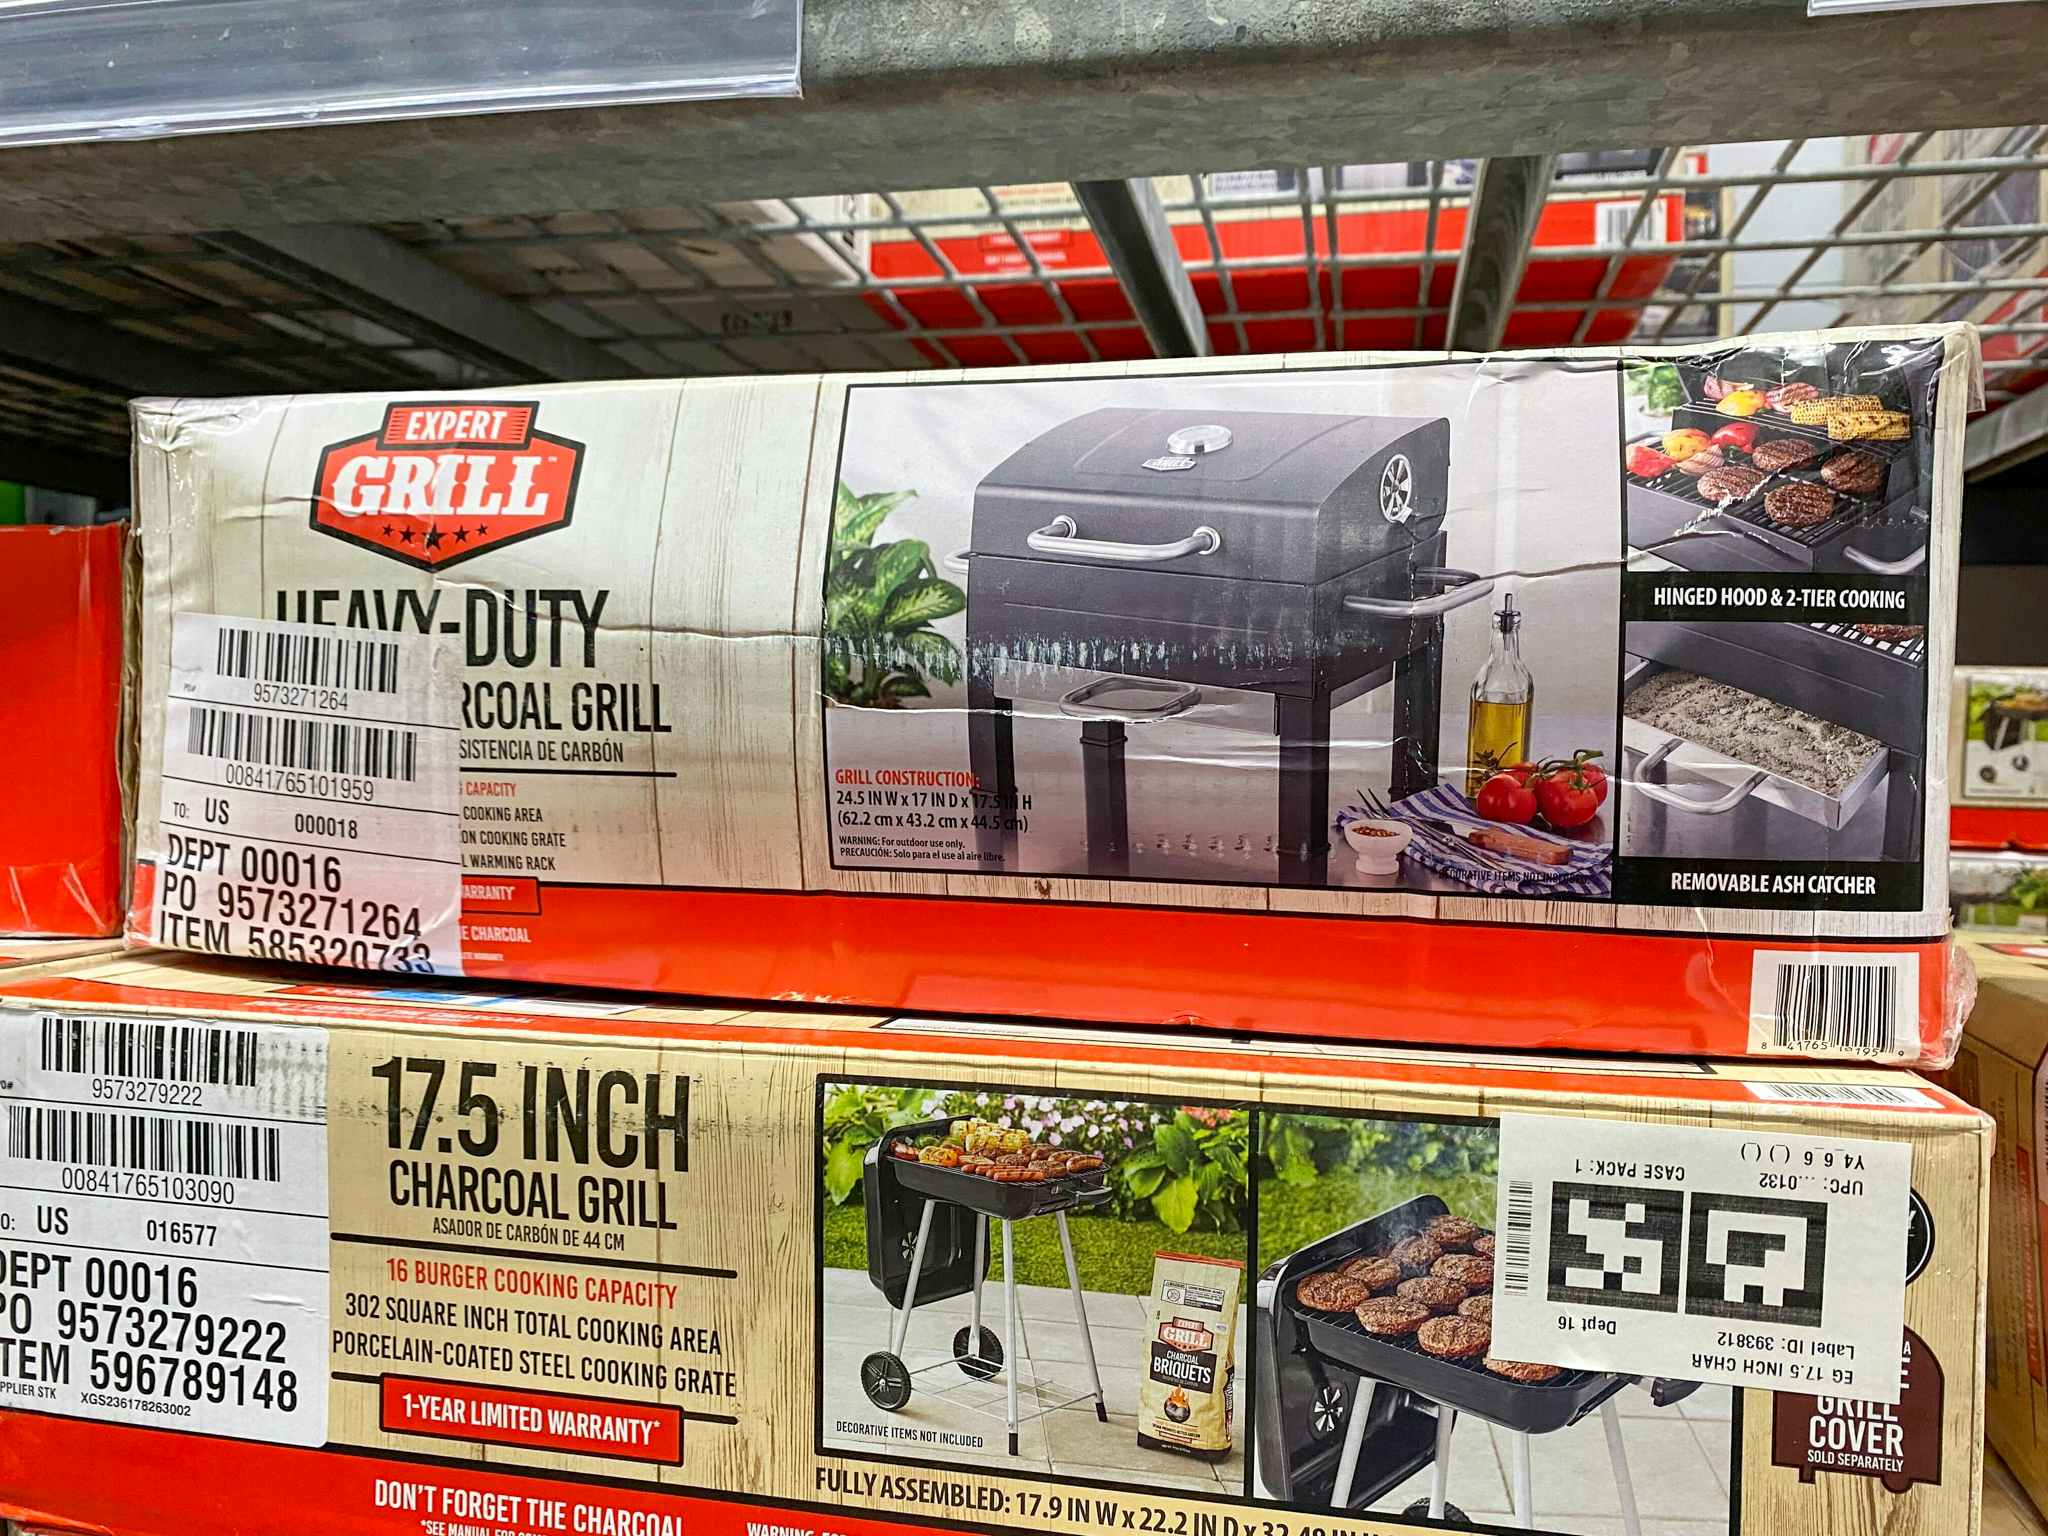 expert grill heavy duty 24 inch charcoal grill on walmart shelf